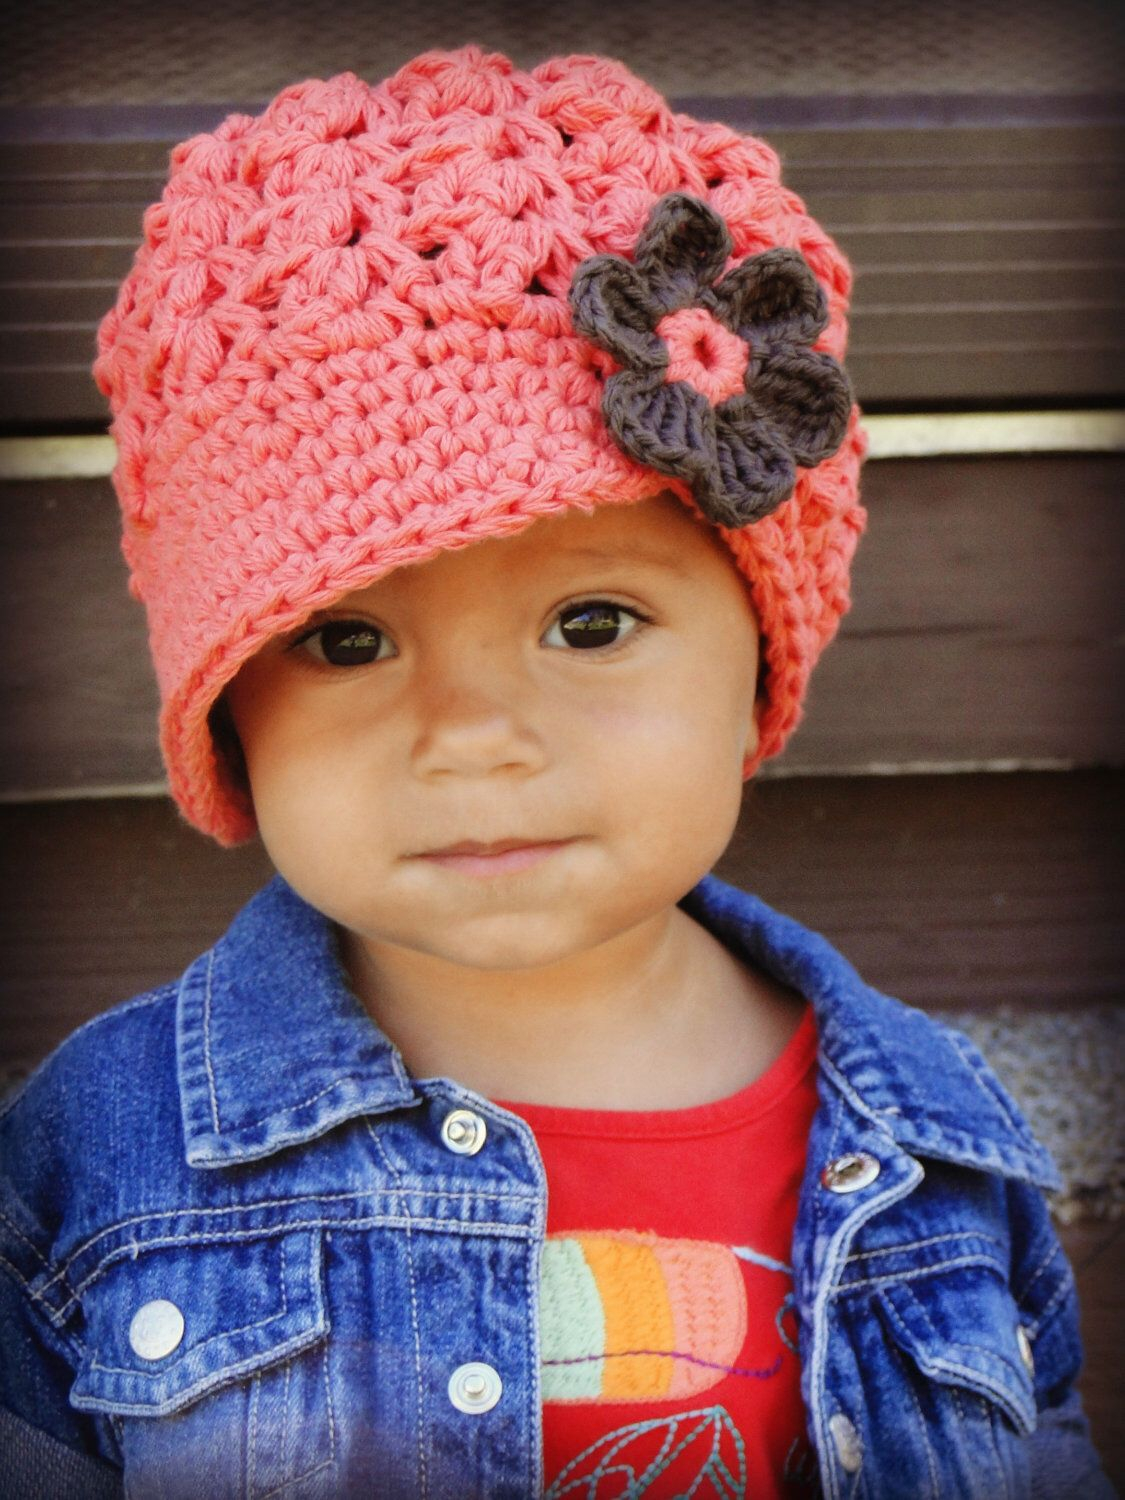 Crochet Newborn Newsboy Hat Pattern Free Pin Danielle Valevich On Ba Lane Pinterest Crochet Hats